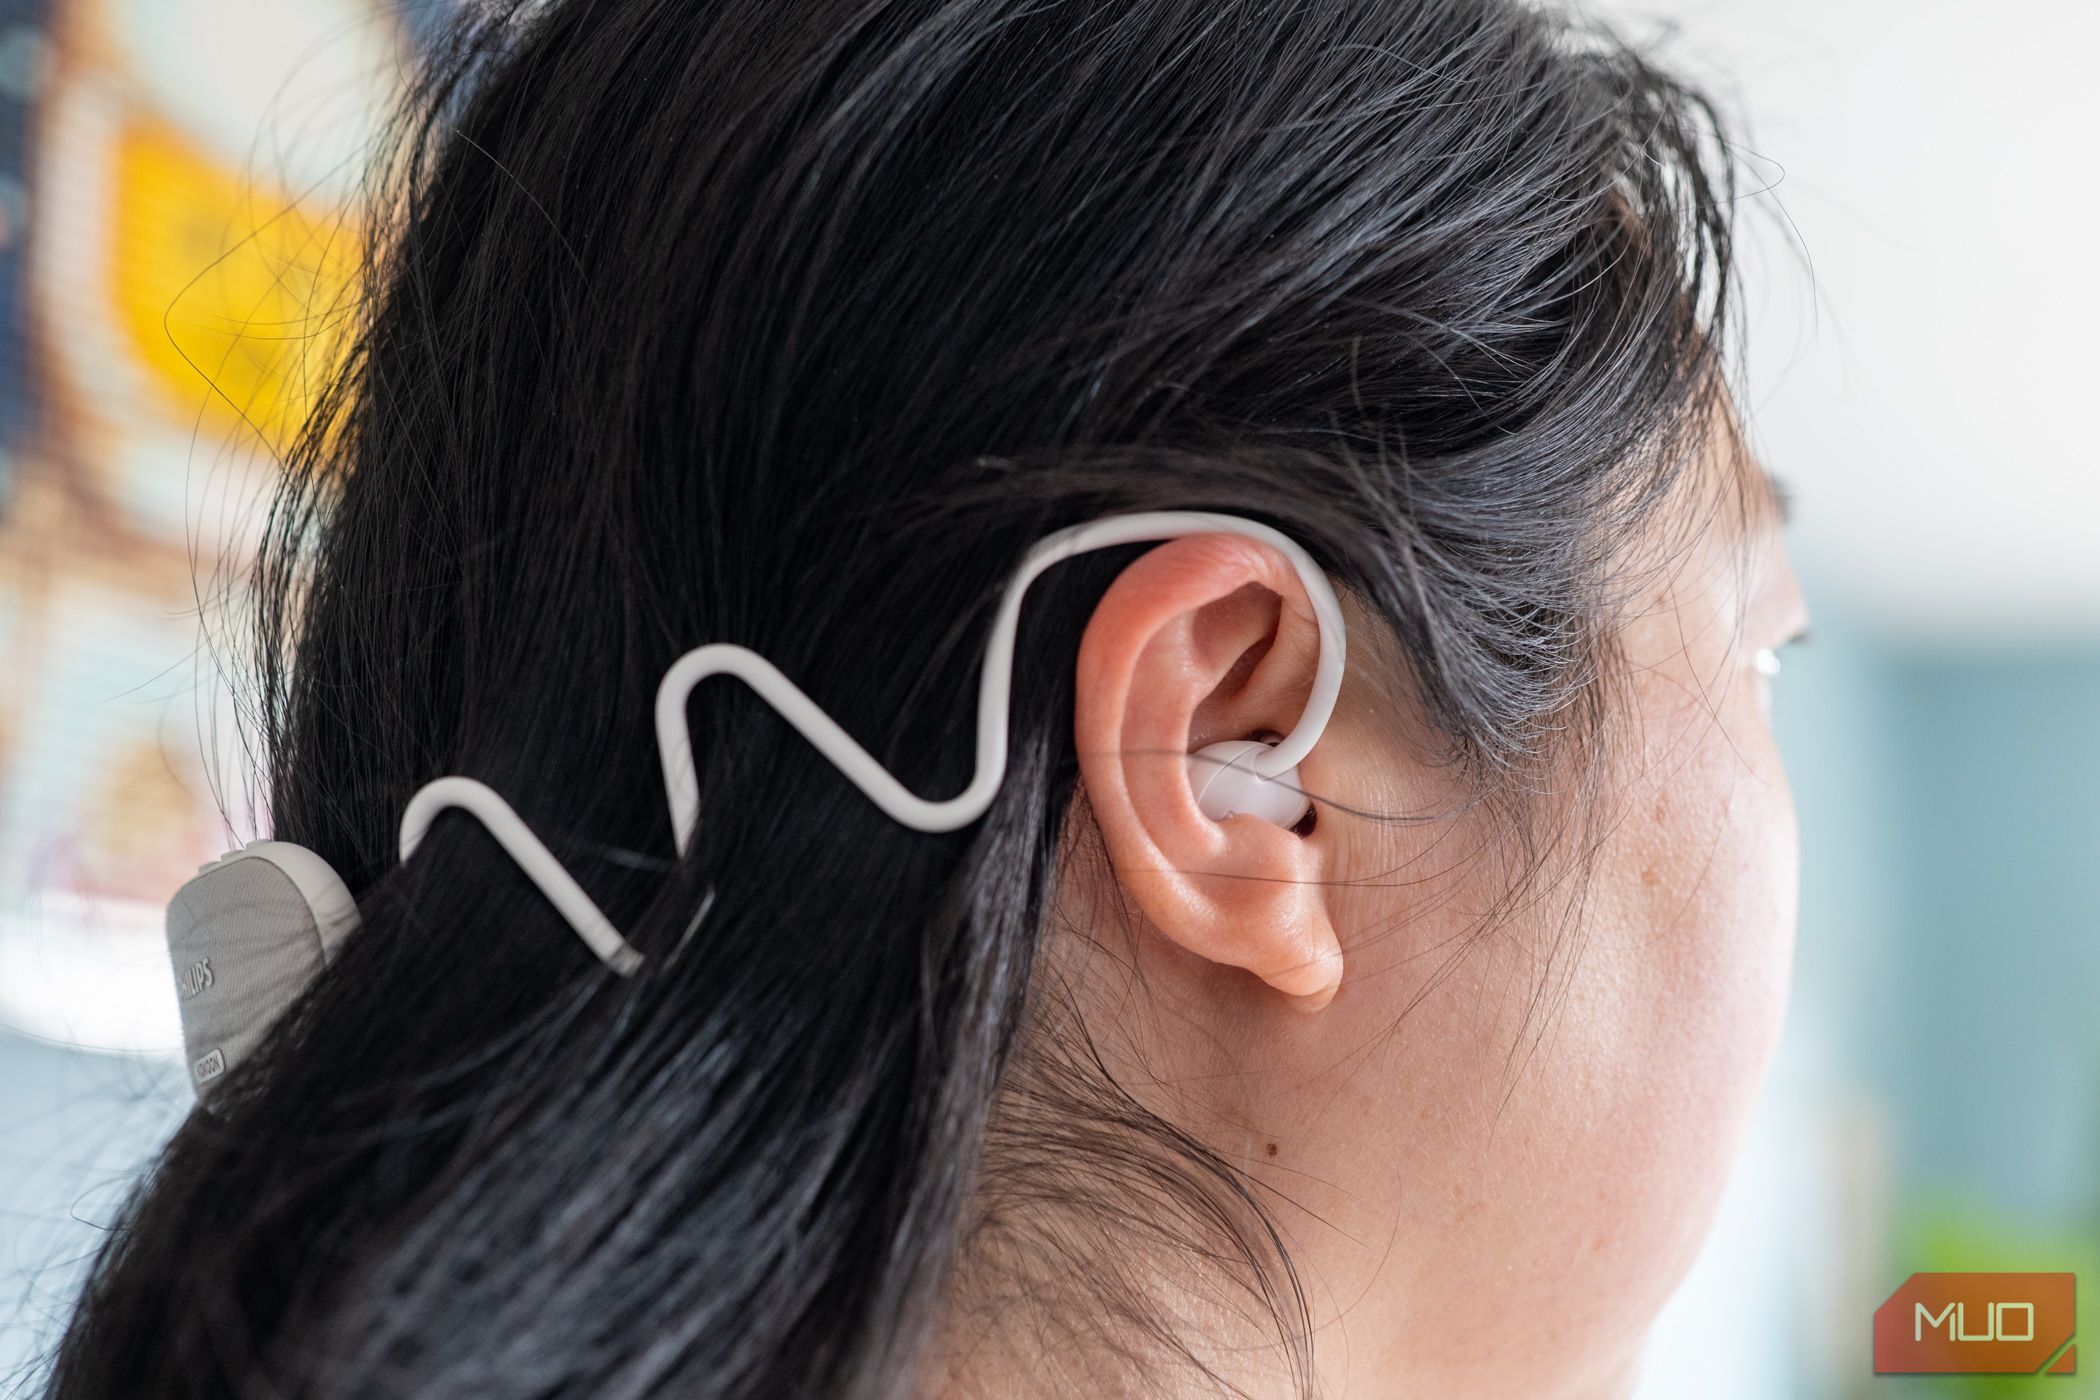 philips sleep headphones with kokoon review - worn alternative side view featured